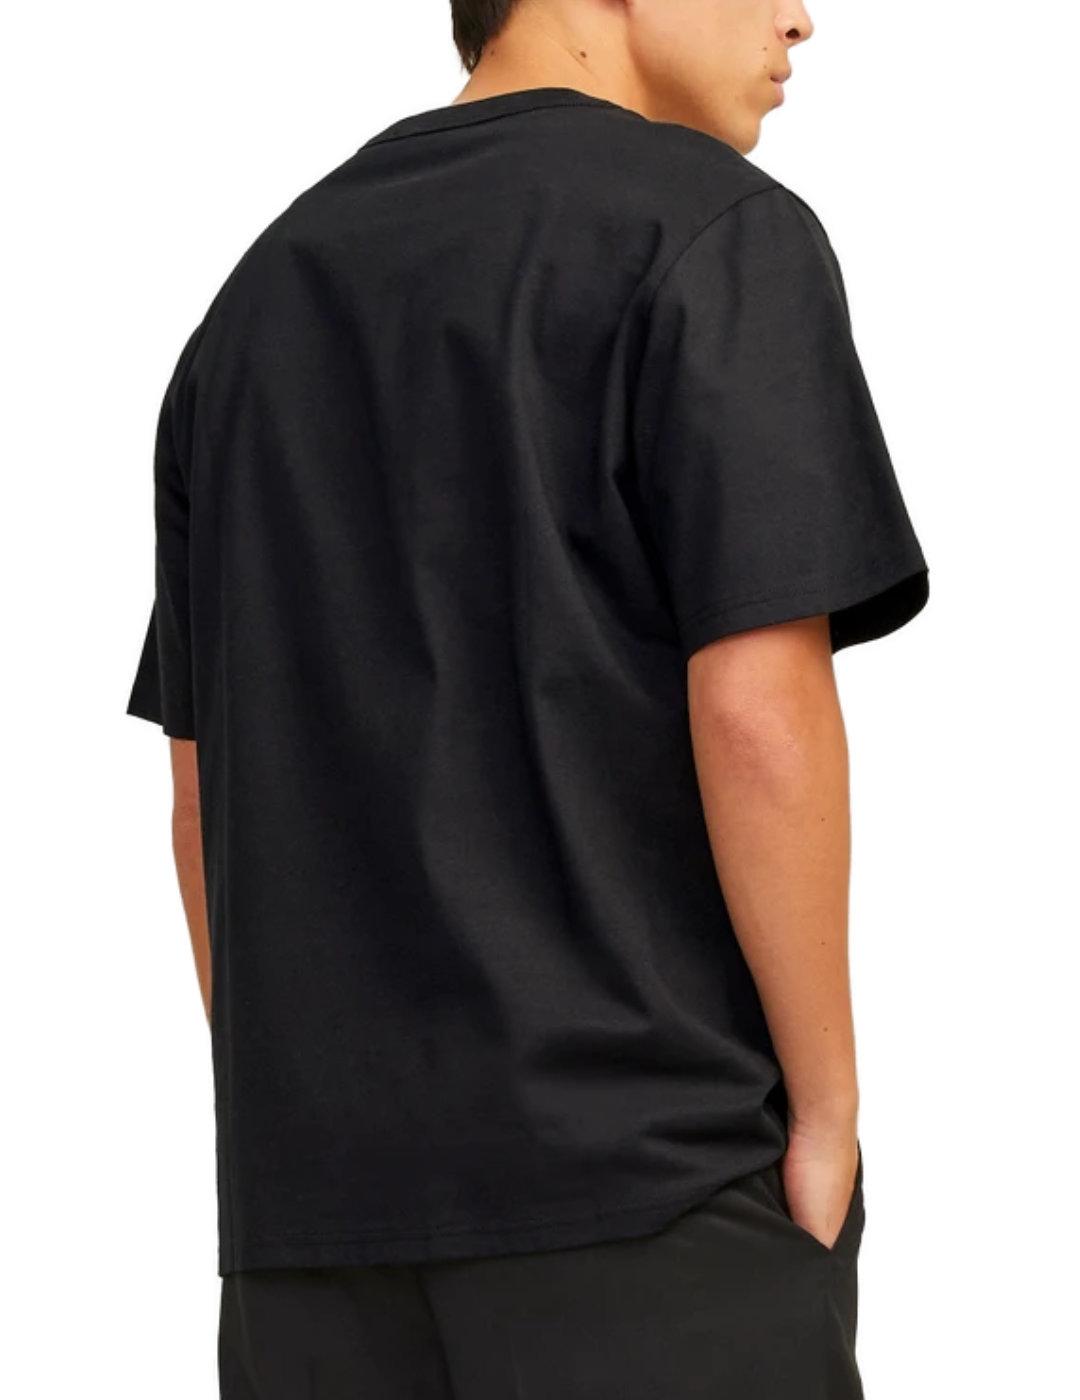 Camiseta Jack&Jones Brooklyn negro manga corta para hombre